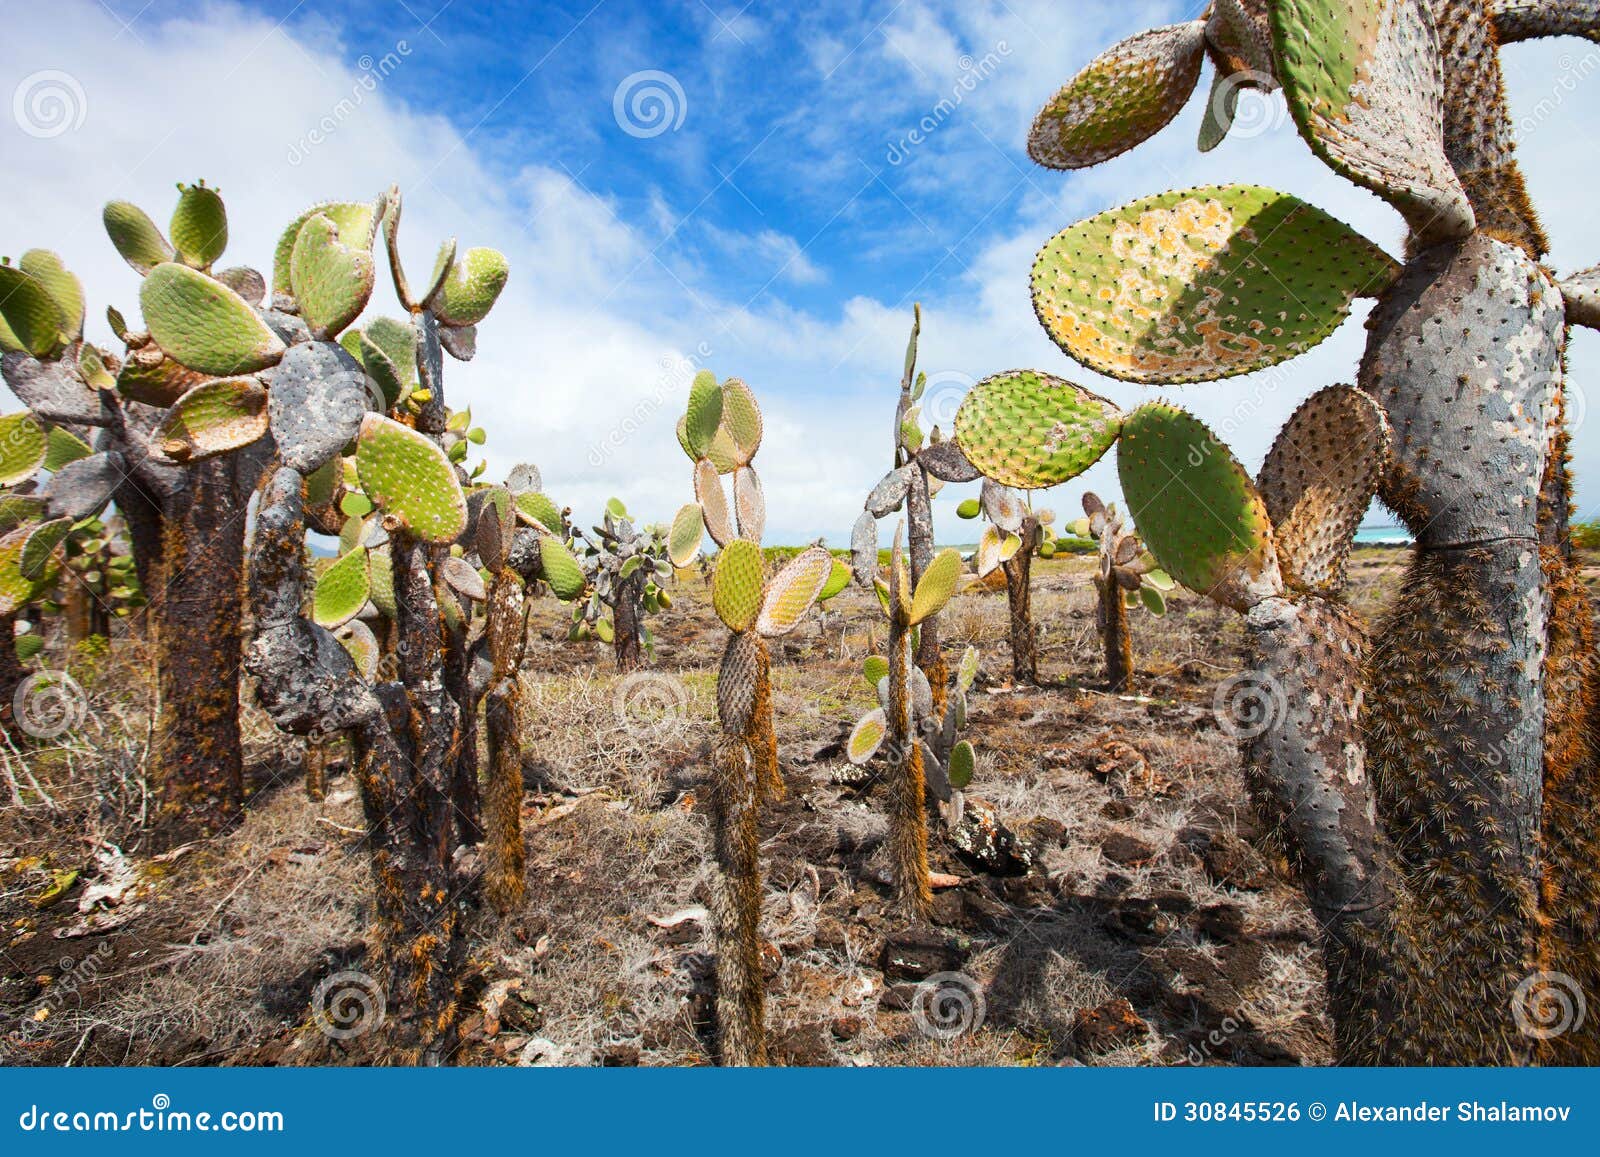 opuntia cactus foreat at galapagos island